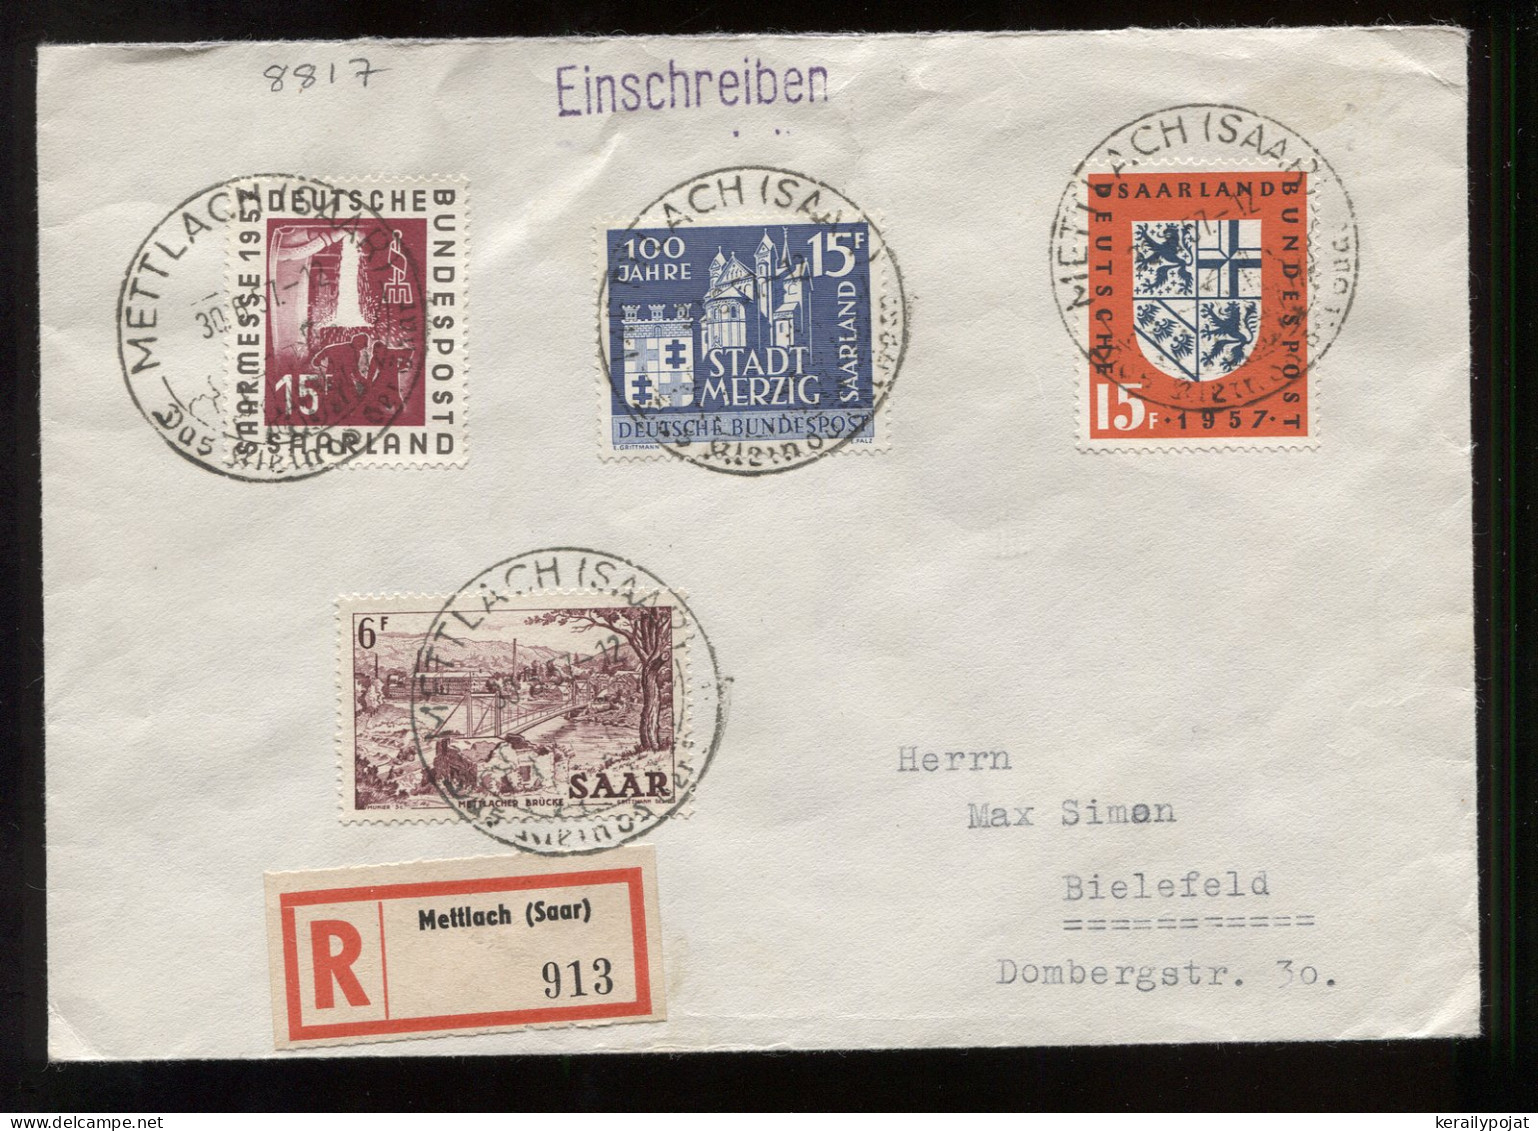 Saarland 1957 Mettlach Registered Cover To Bielefeld__(8817) - Cartas & Documentos